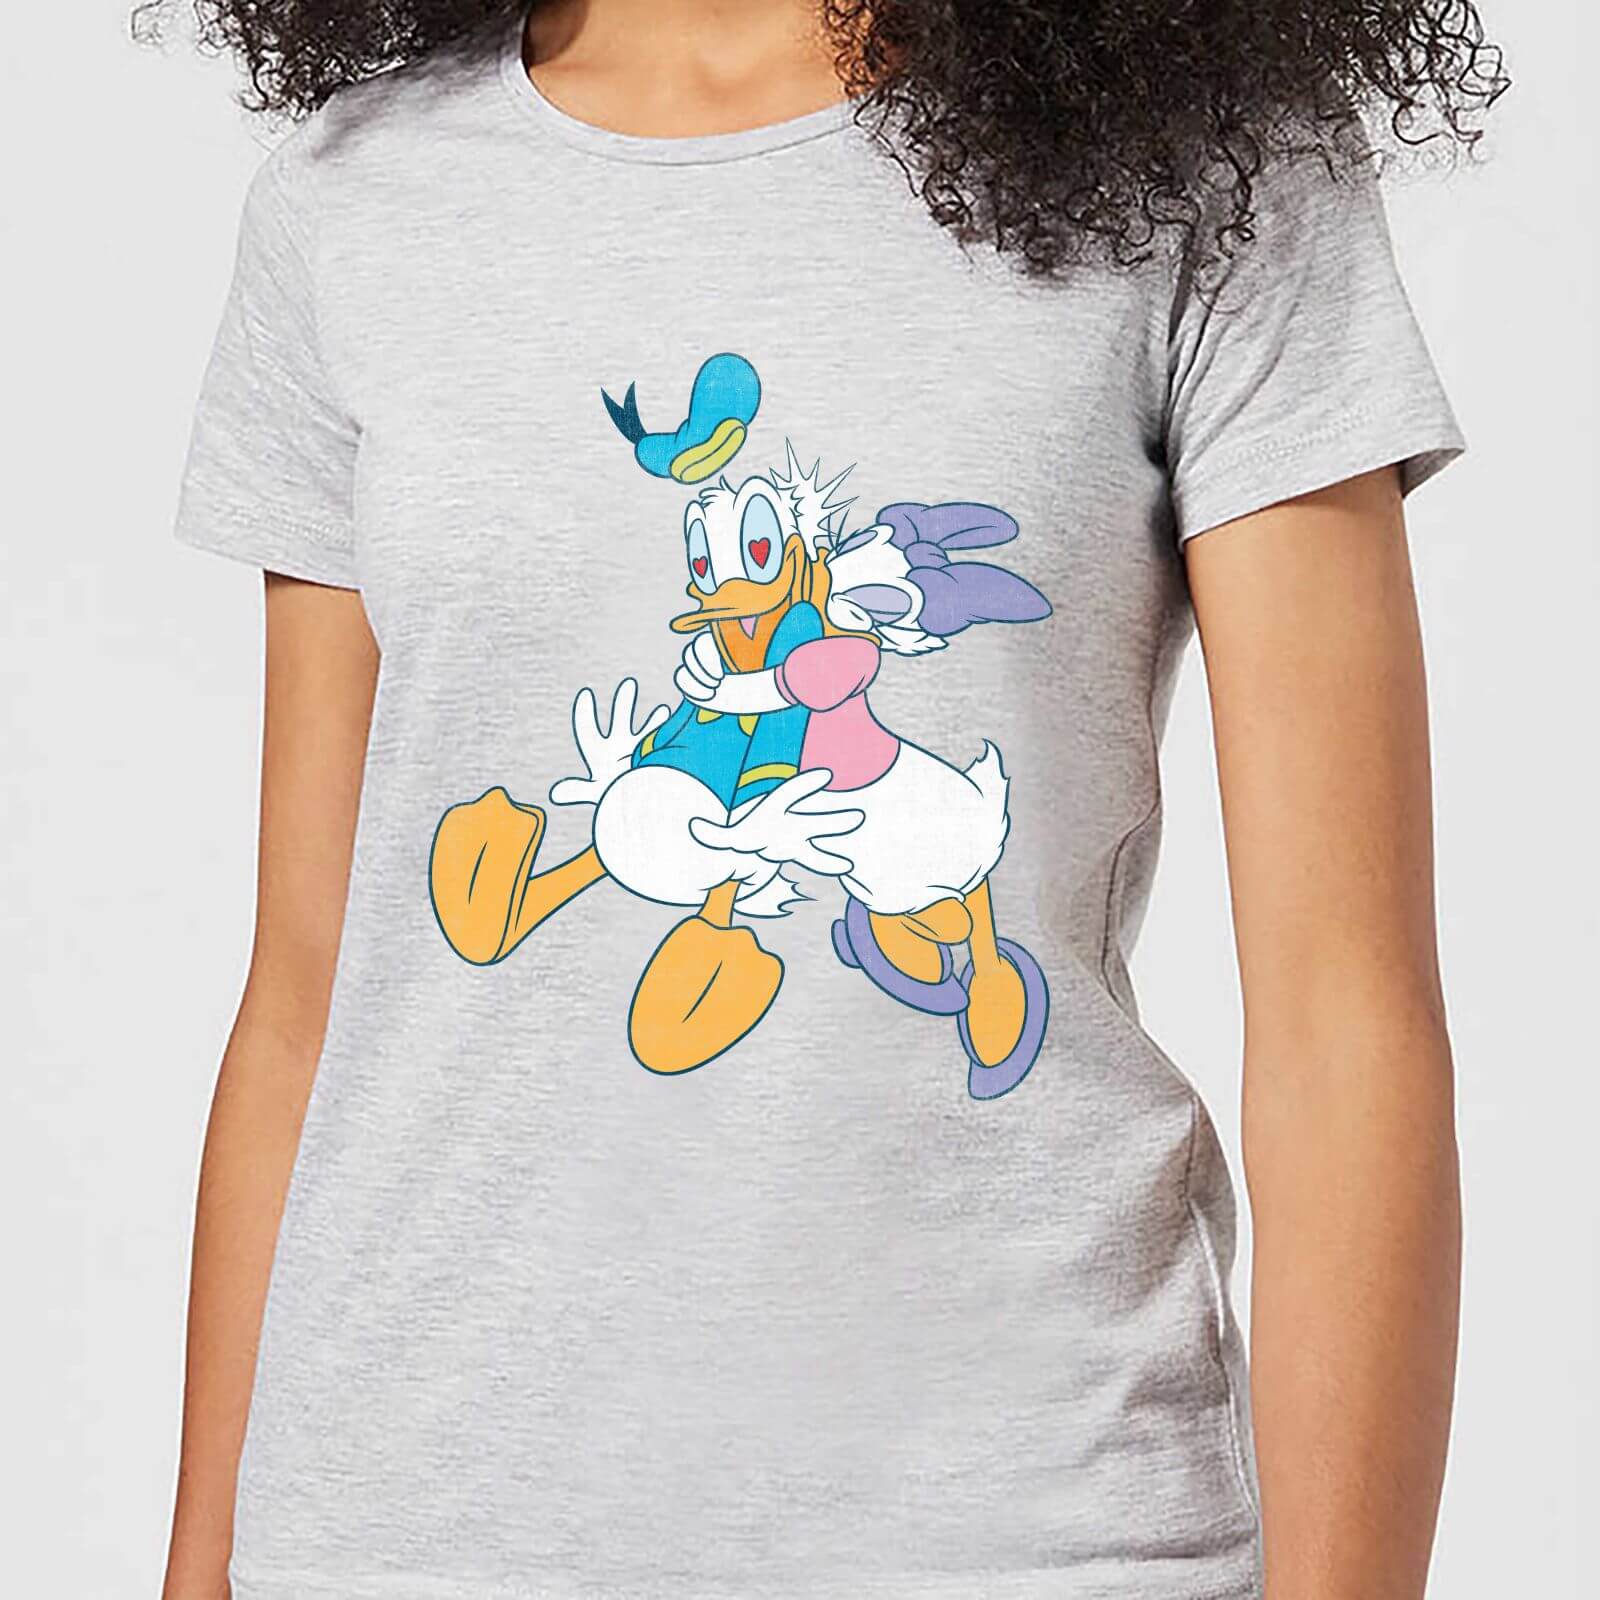 Disney Mickey Mouse Donald Daisy Kiss Women's T-Shirt - Grey - 3XL